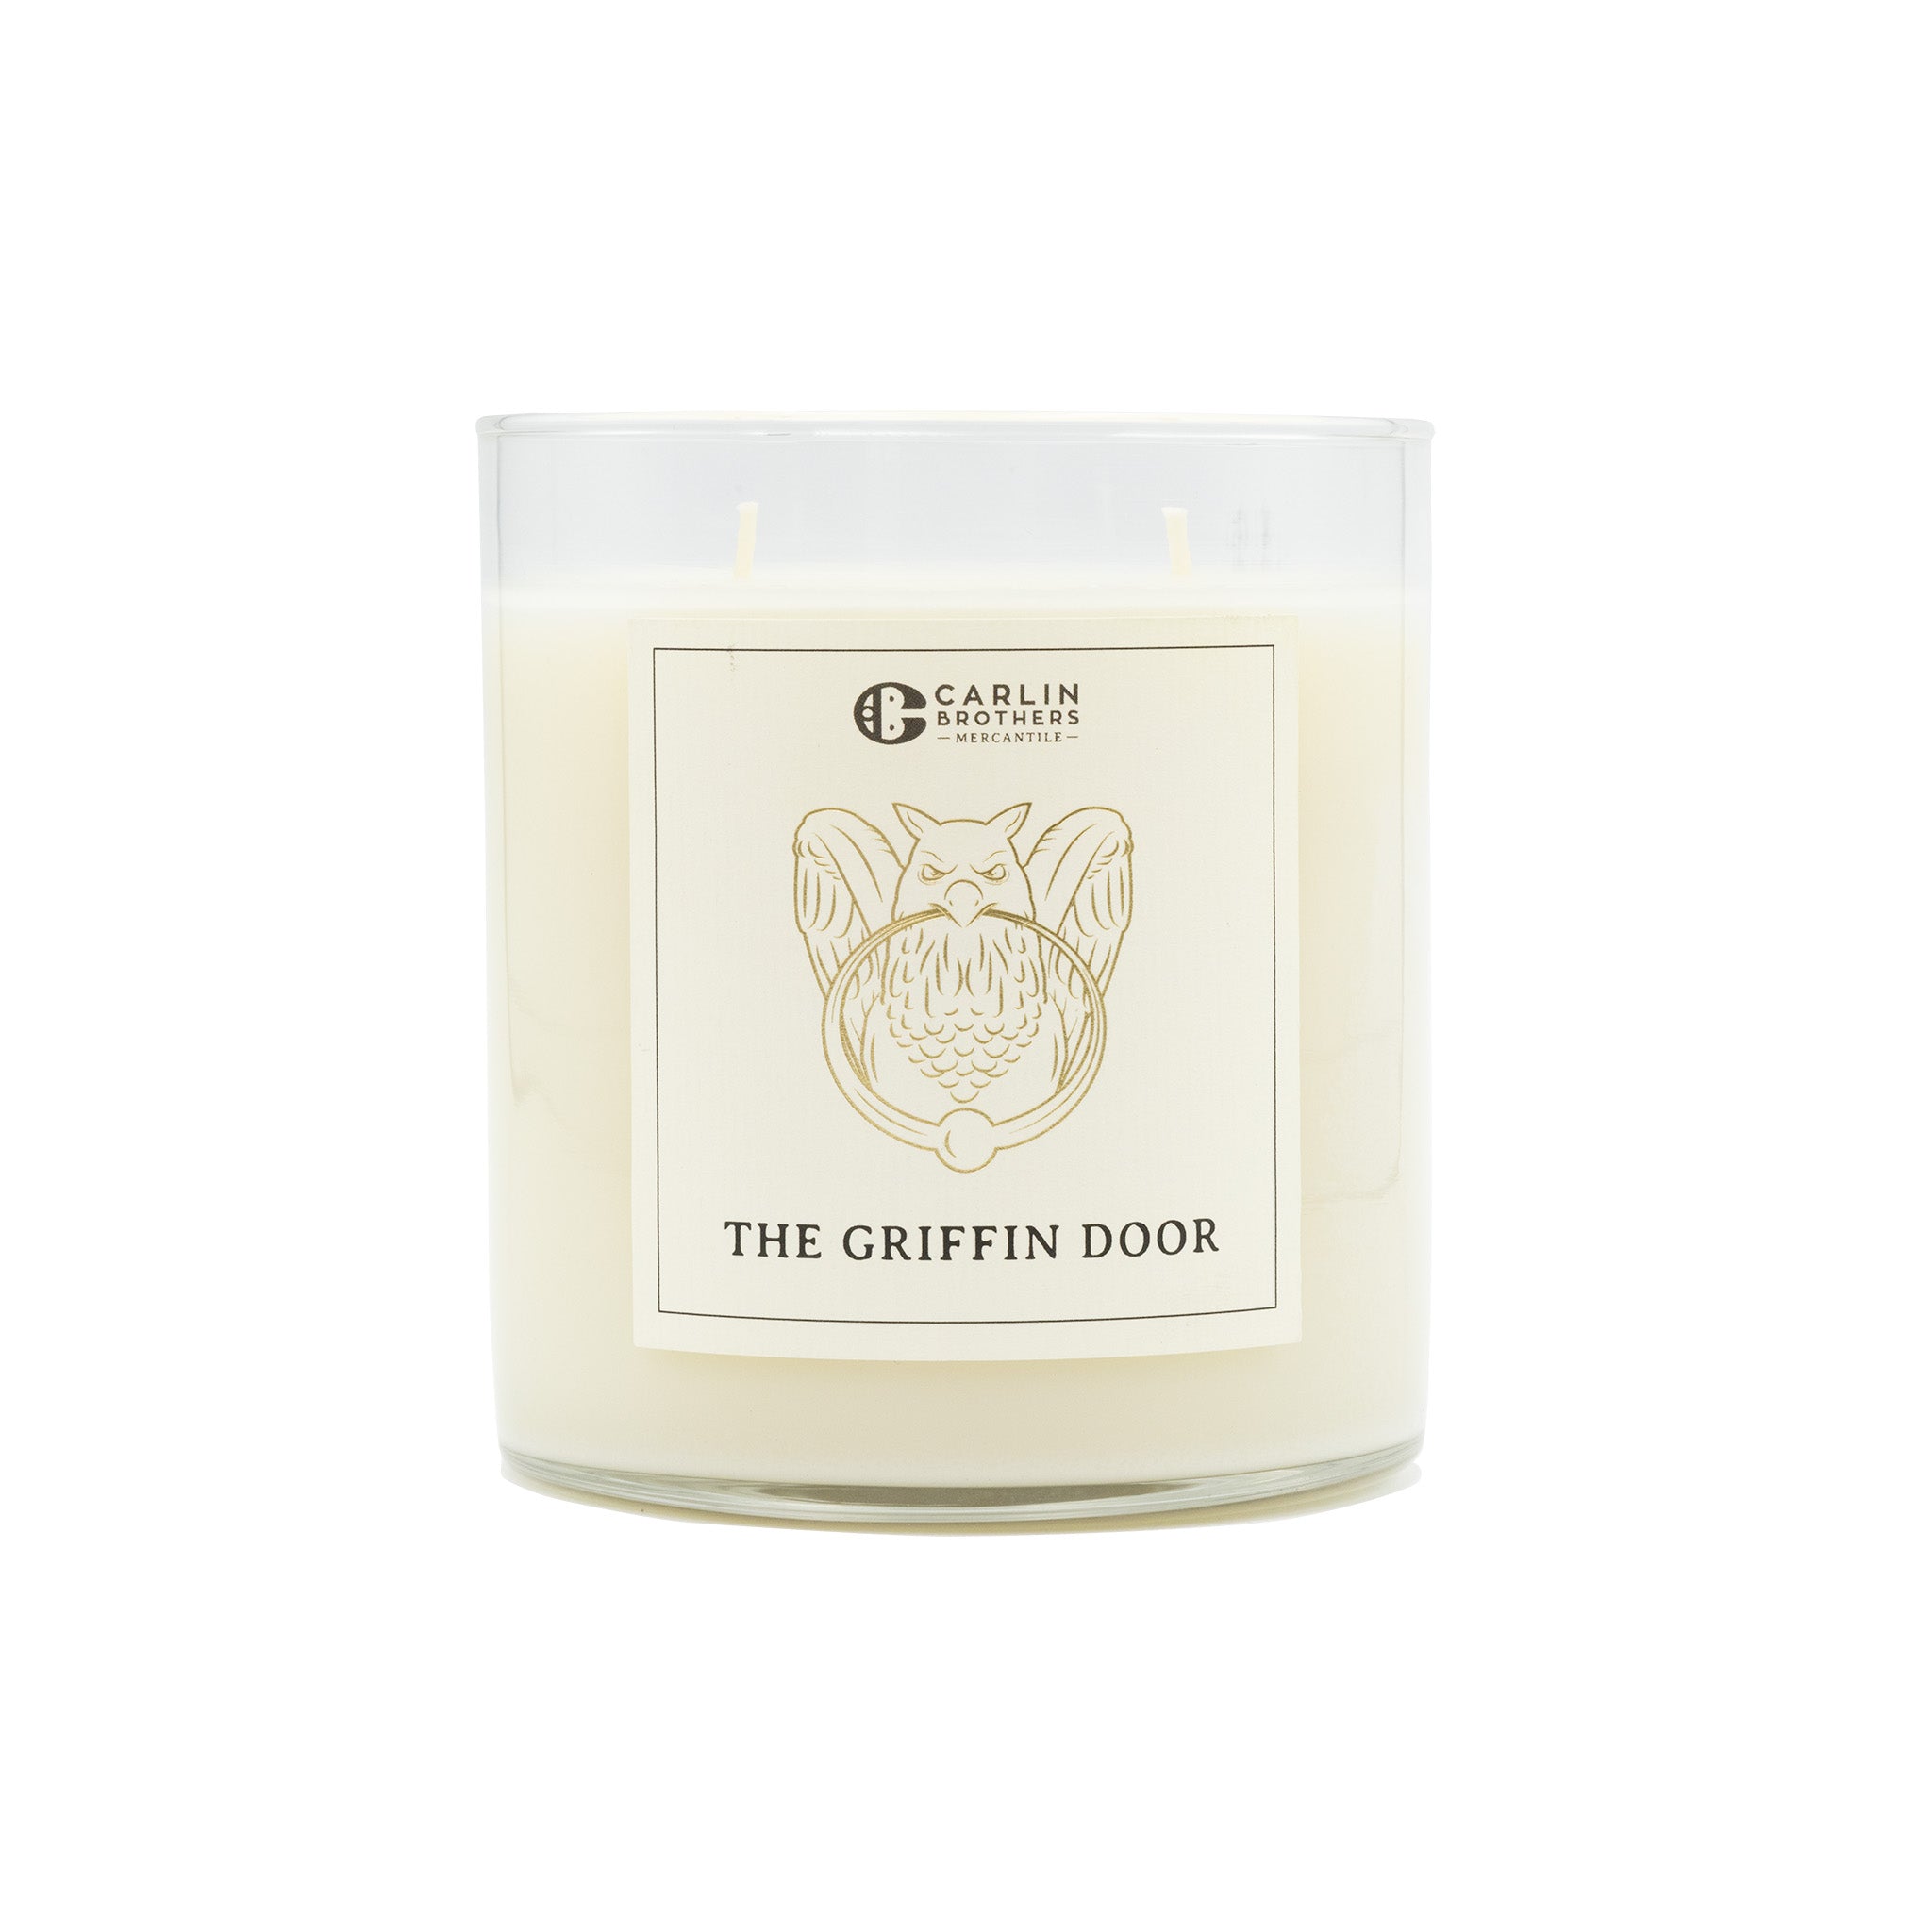 The Griffin Door Wizarding Candle